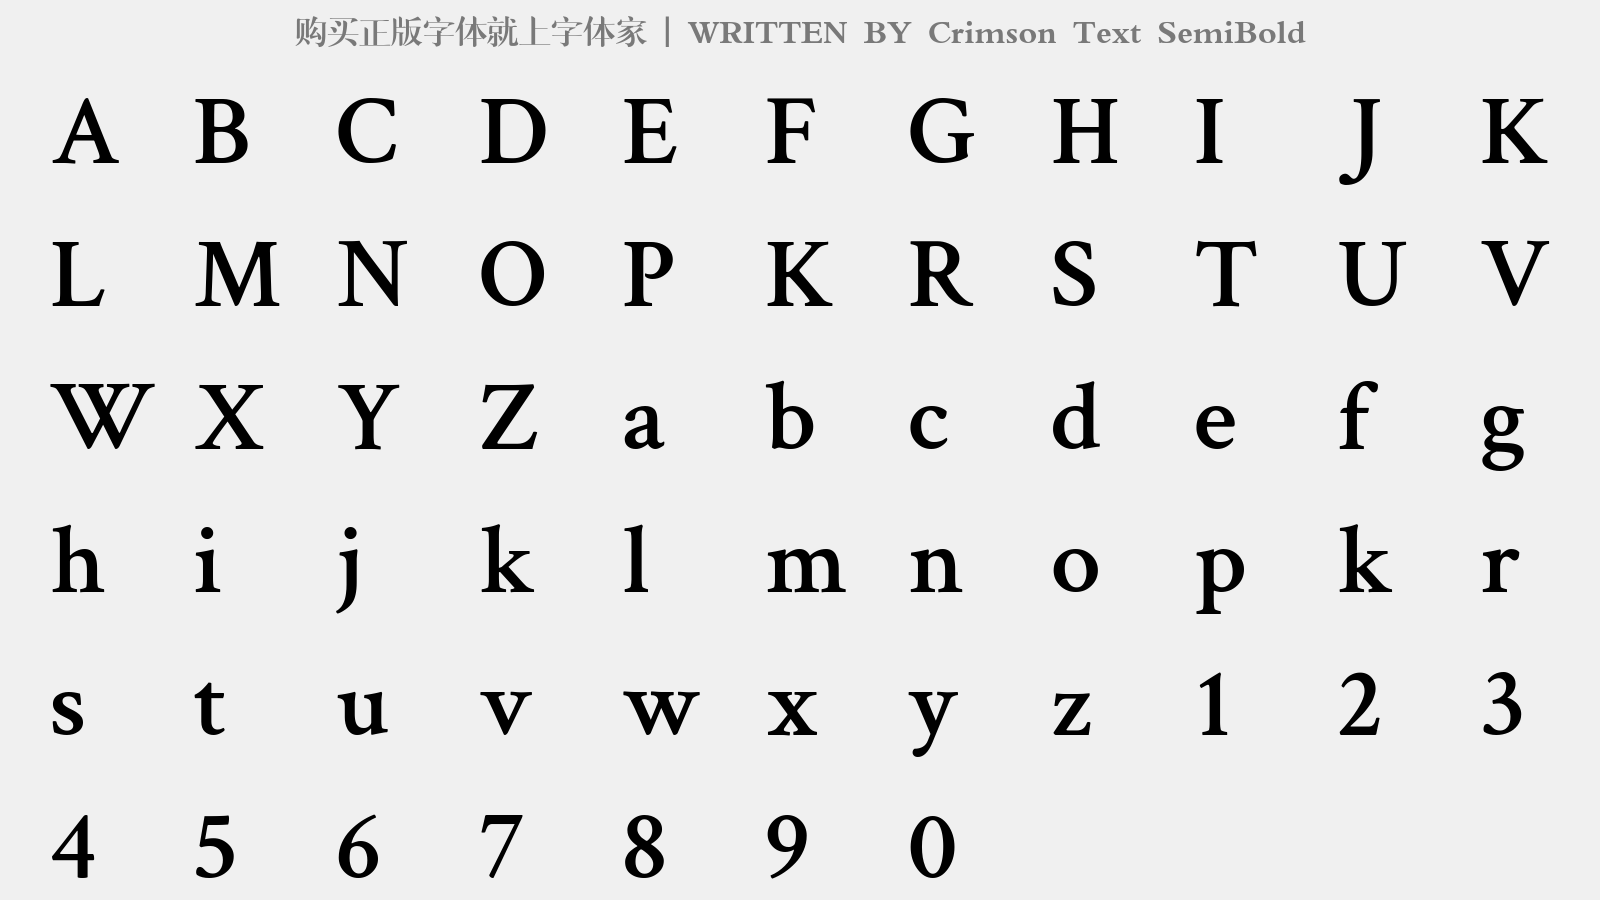 Crimson Text SemiBold - 大写字母/小写字母/数字